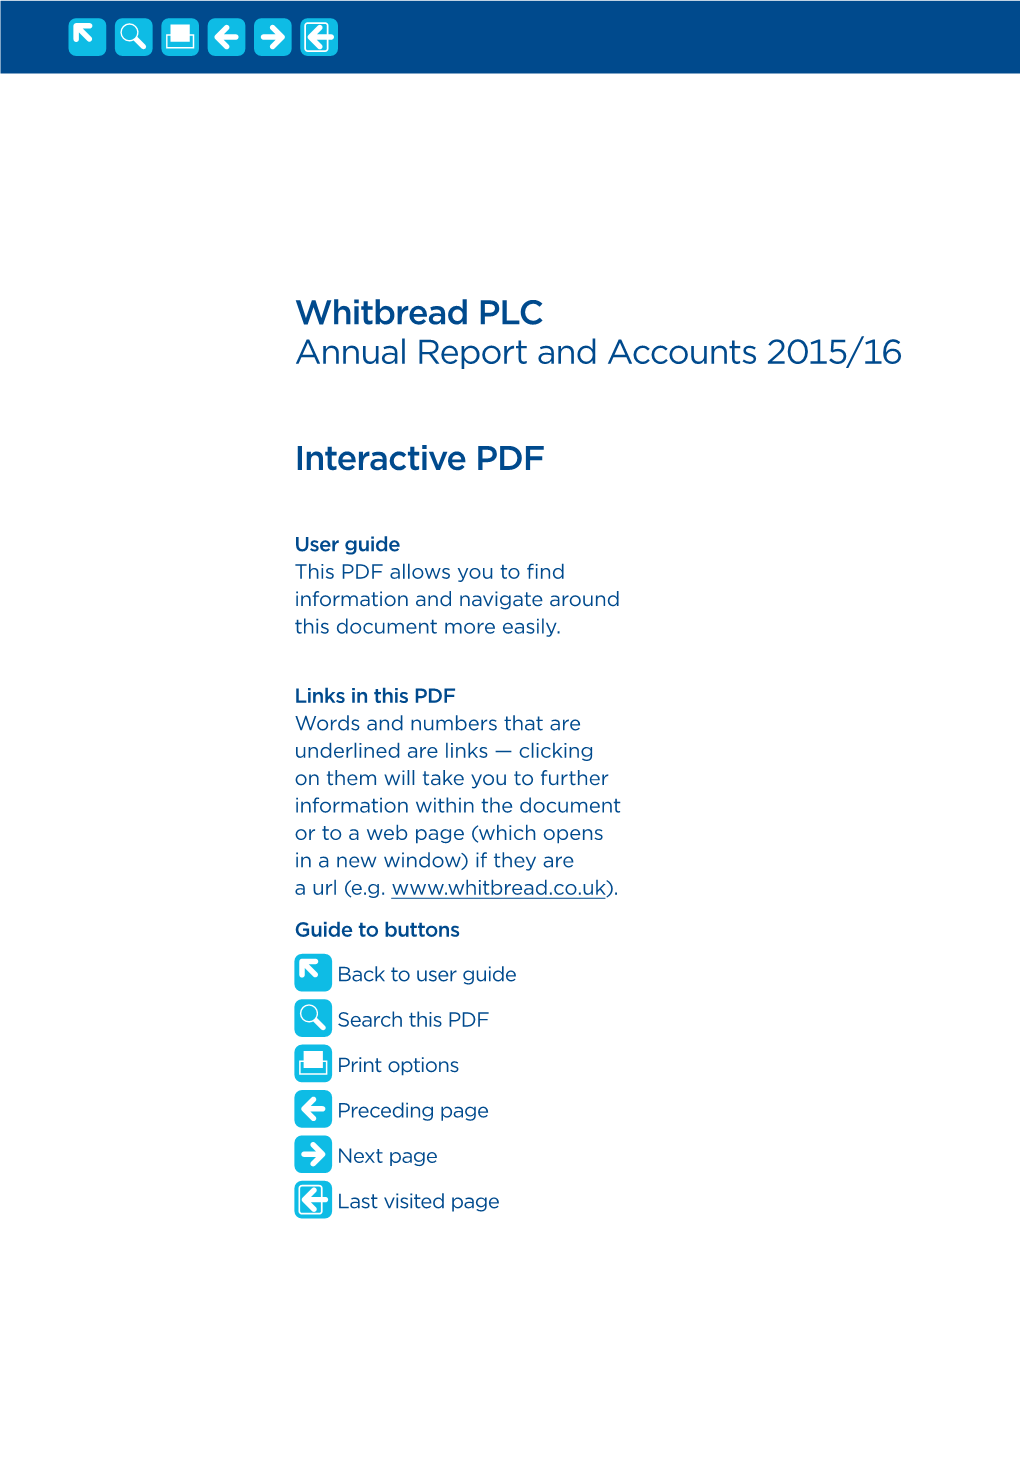 Interactive PDF Whitbread PLC Annual Report and Accounts 2015/16